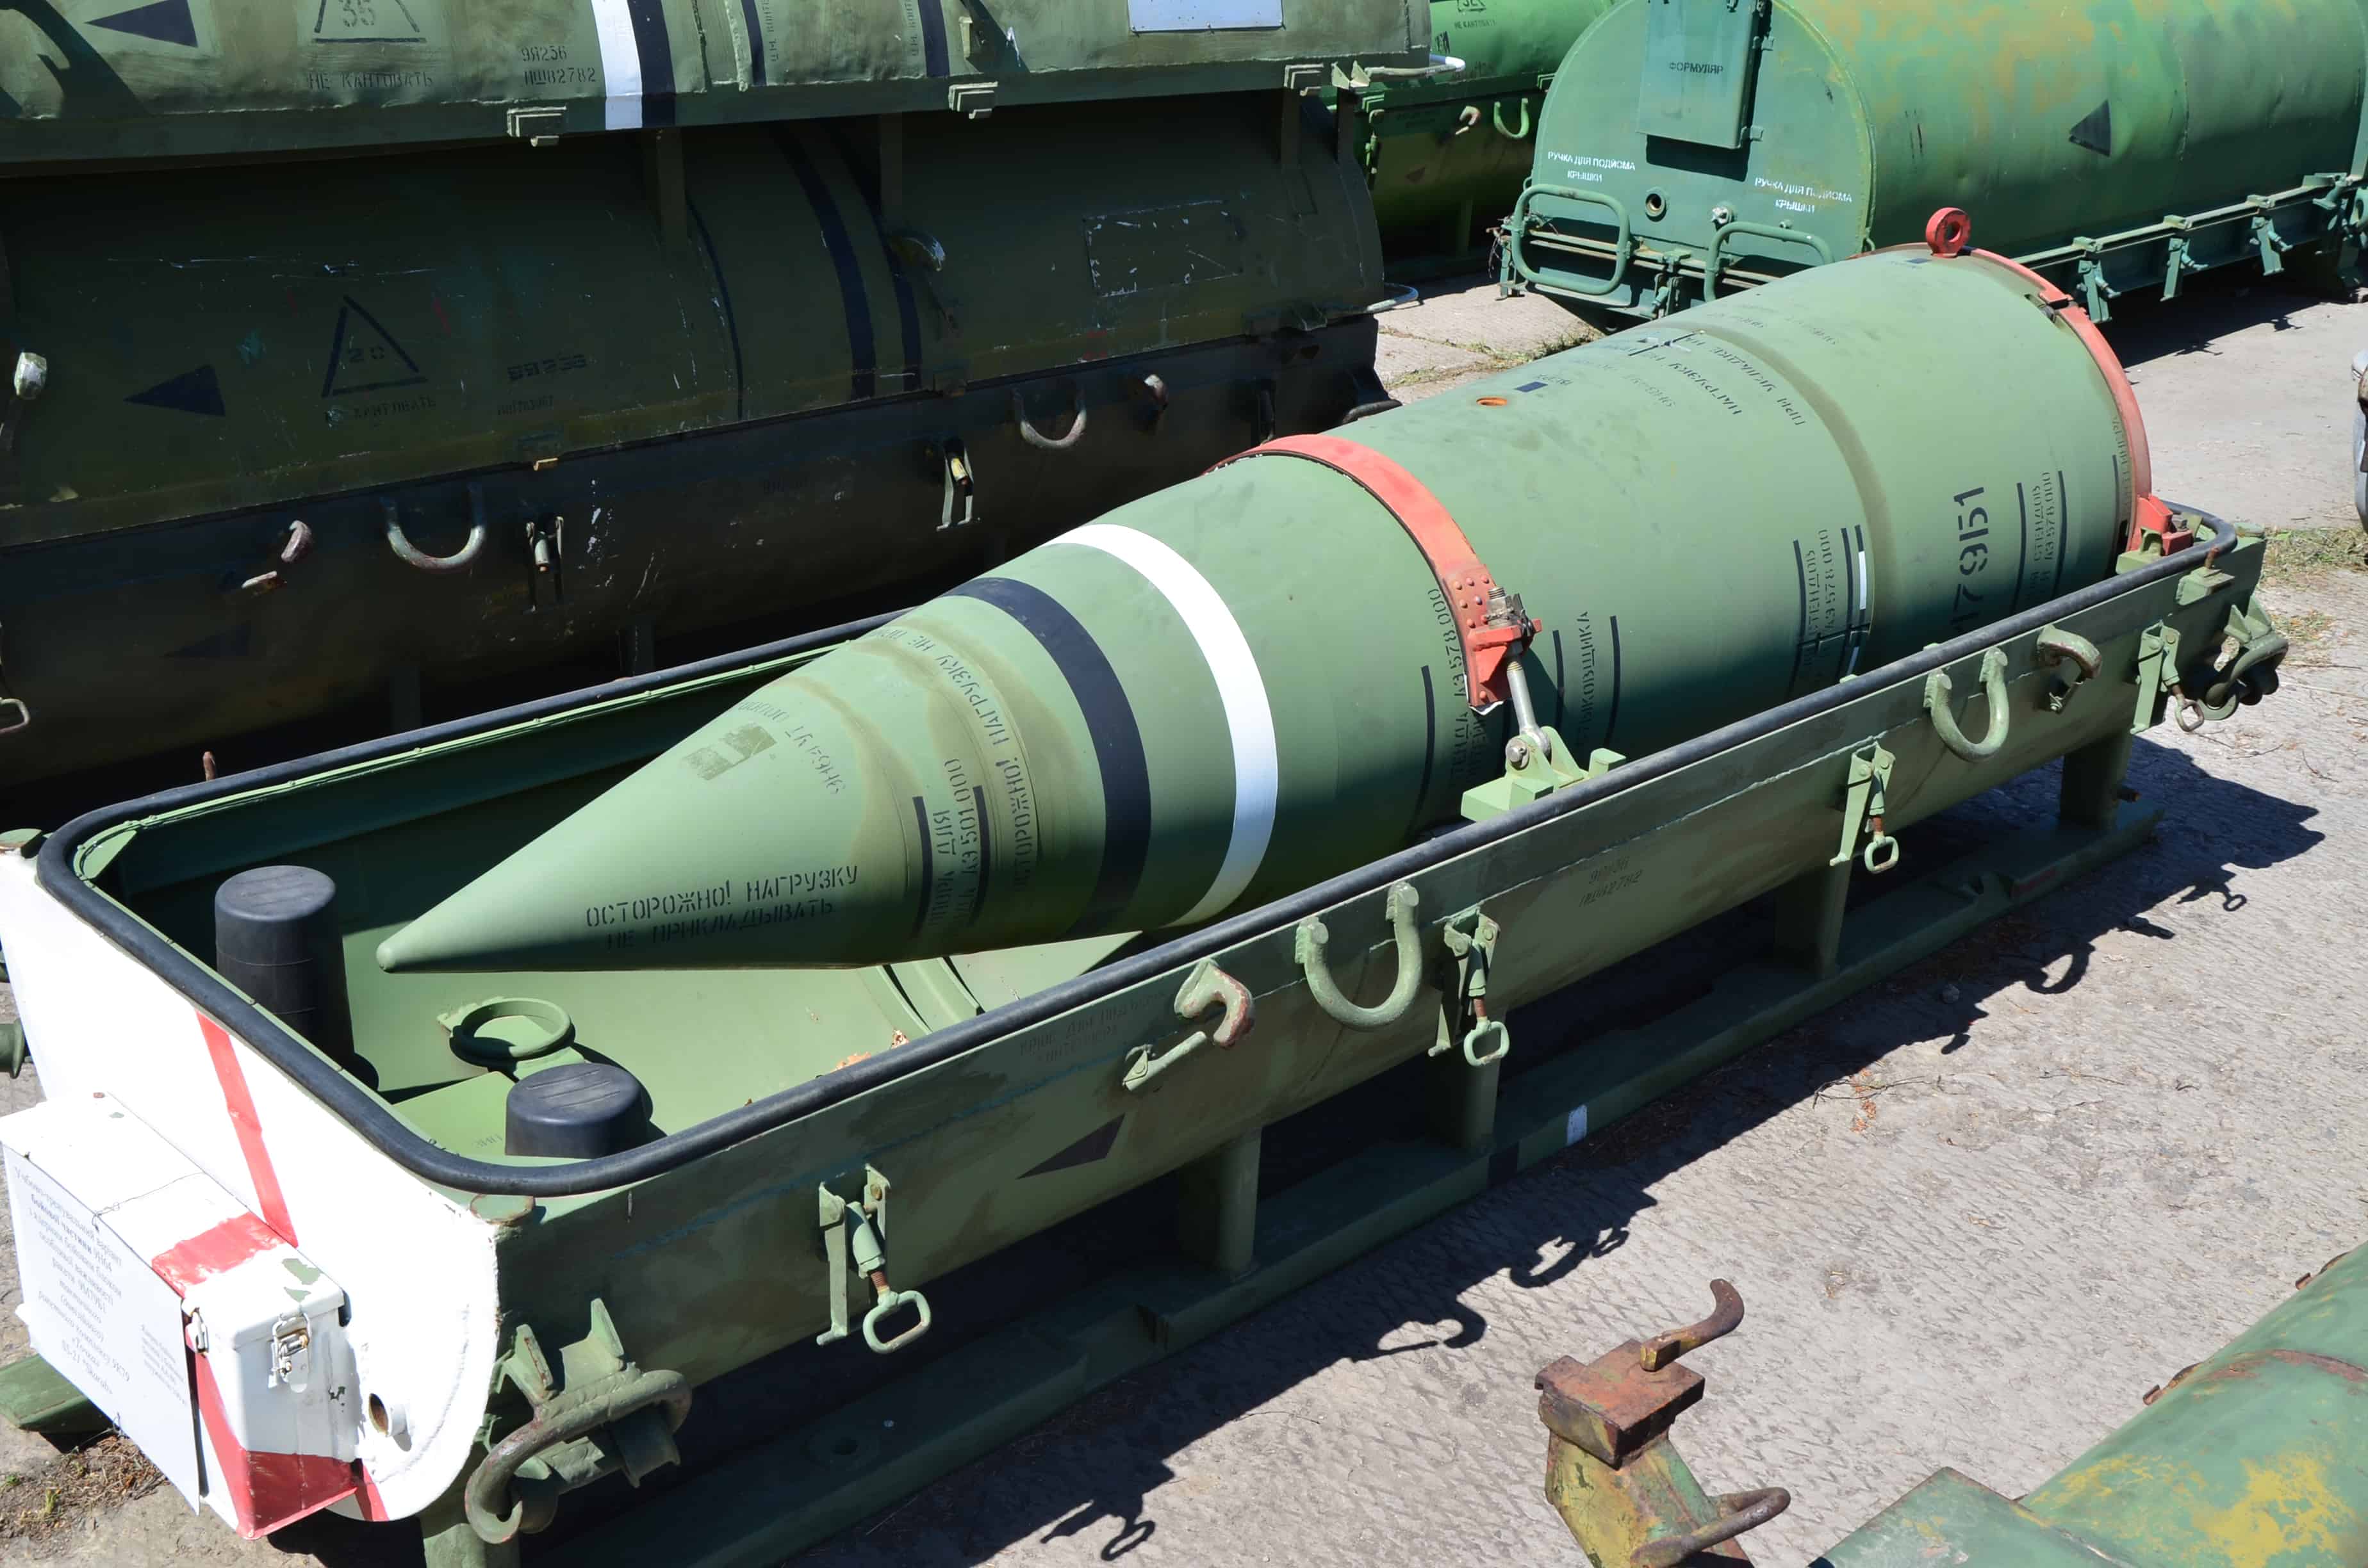 Missile at Strategic Missile Forces Museum near Pobuzke, Ukraine